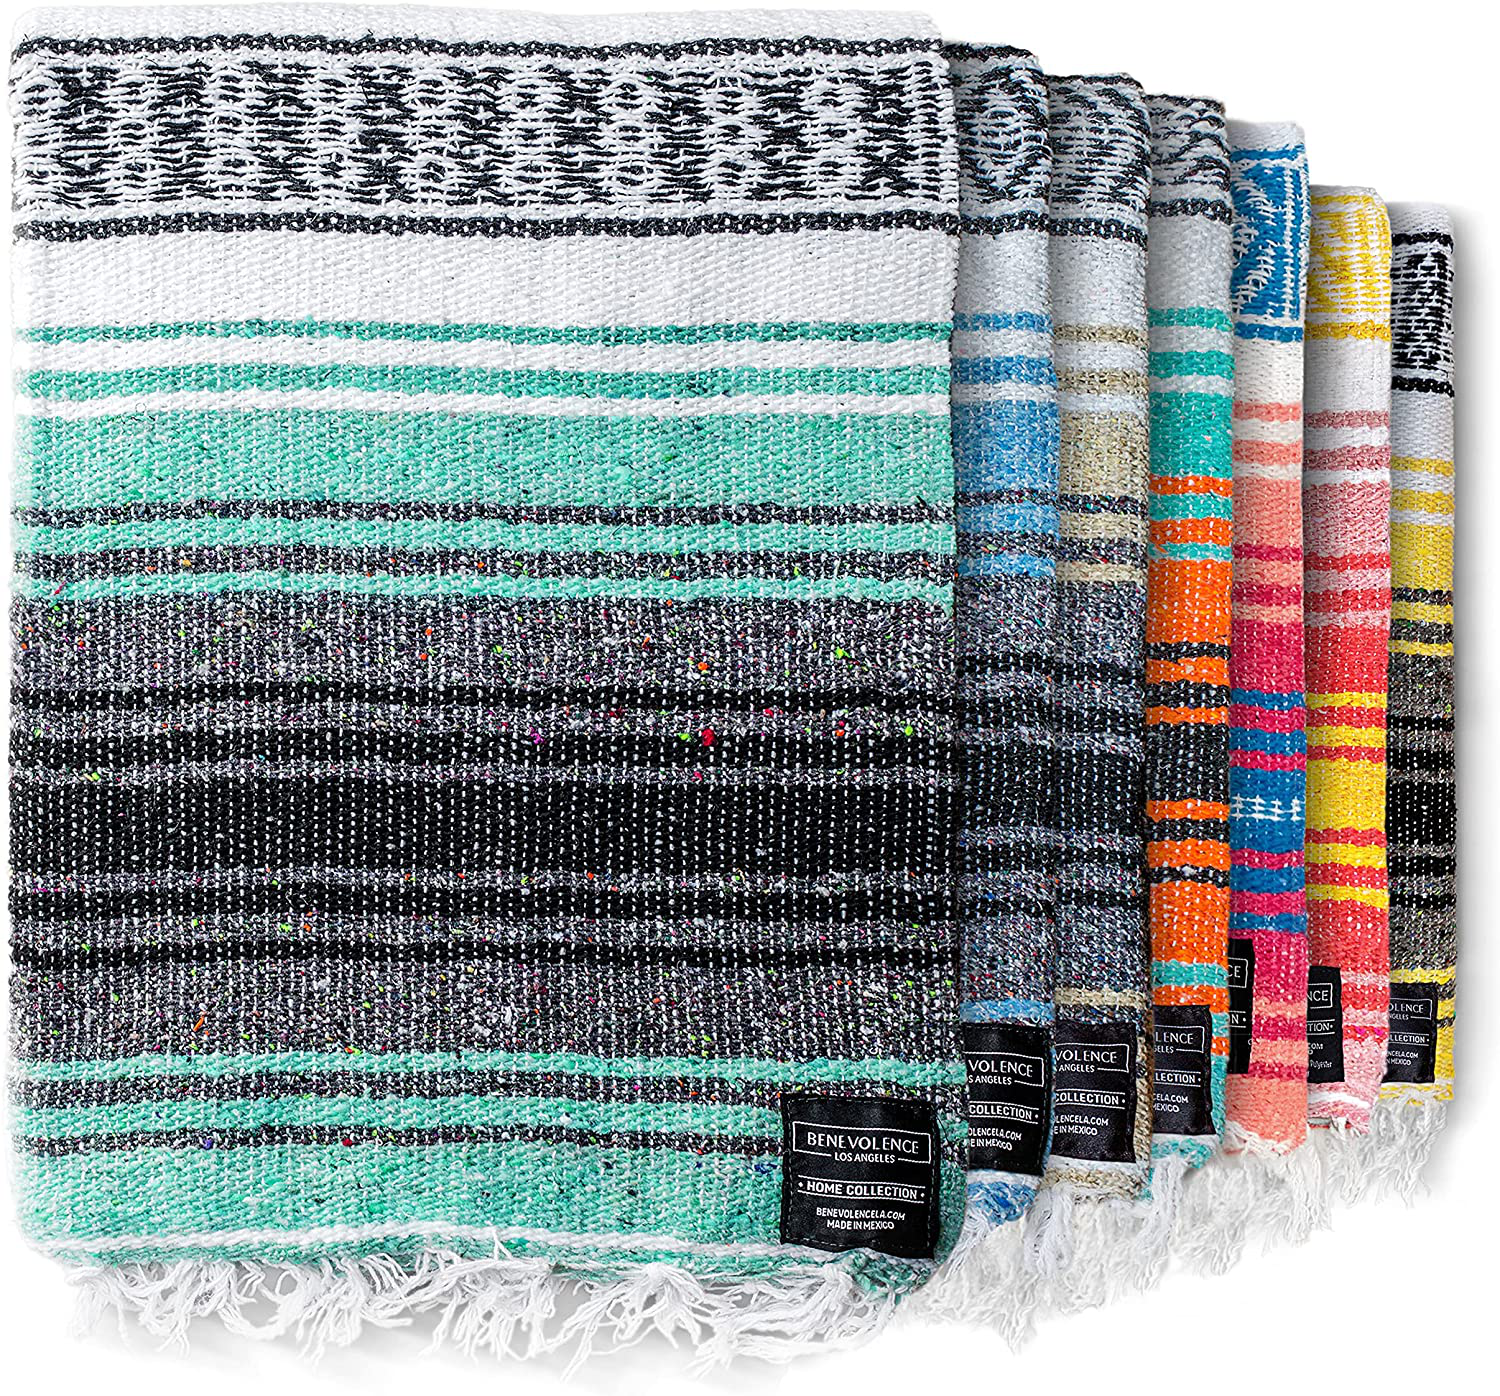 Authentic Mexican Blanket - Park Blanket, Handwoven Serape Blanket, Perfect as Beach Blanket, Picnic Blanket, Outdoor Blanket, Yoga Blanket, Camping Blanket, Car Blanket, Woven Blanket